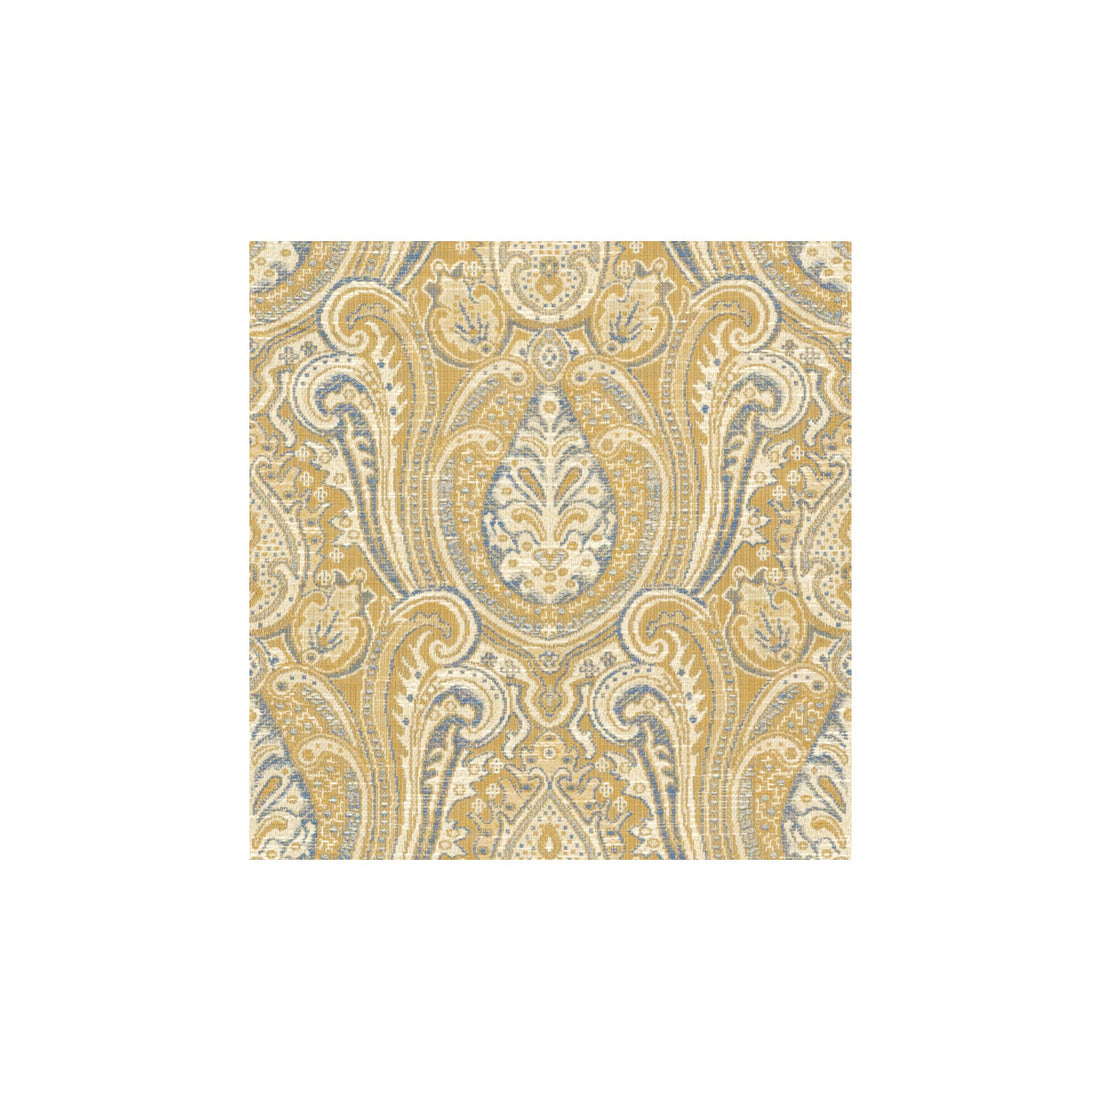 Kravet Design fabric in 31395-415 color - pattern 31395.415.0 - by Kravet Design in the Gis collection